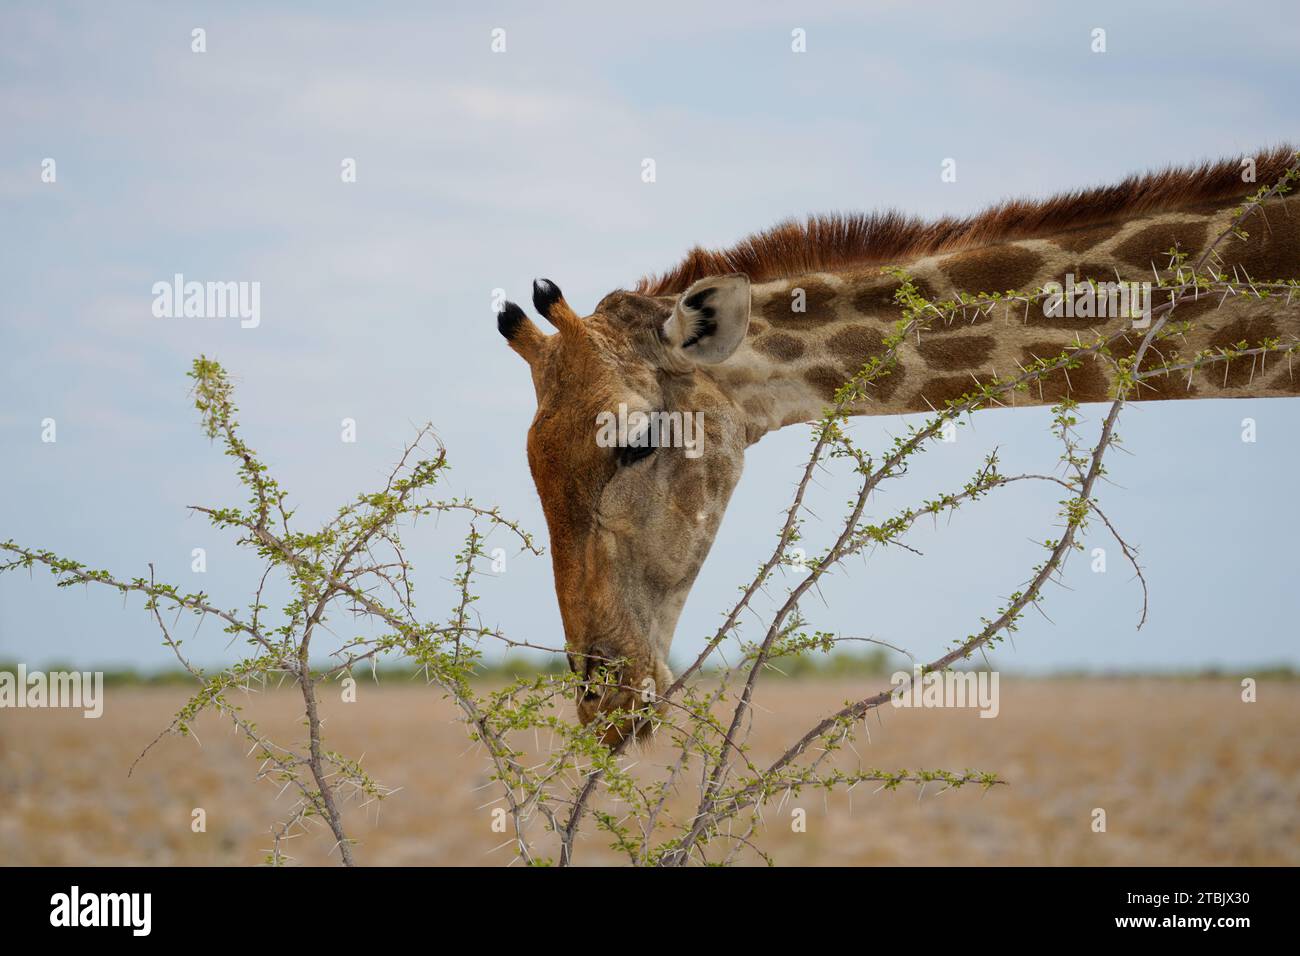 Portrait of giraffe eating leaves from the tree branch, Etosha National Park, Namibia Stock Photo